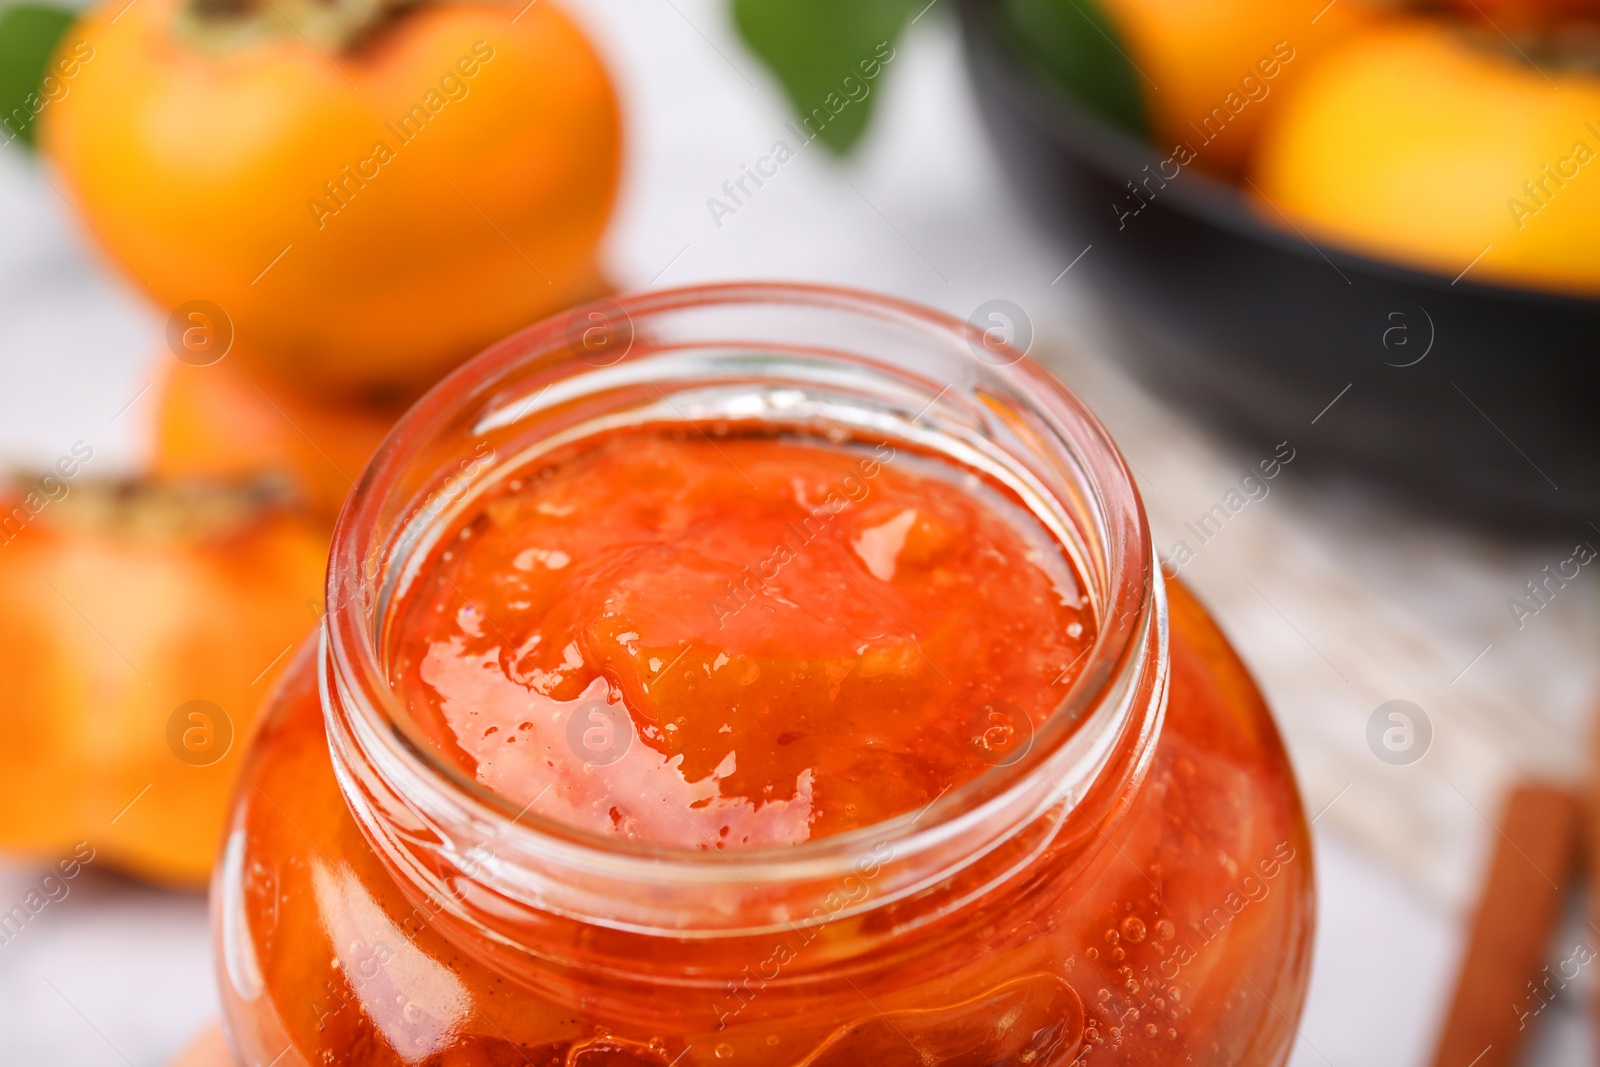 Photo of Jar of tasty persimmon jam, closeup view